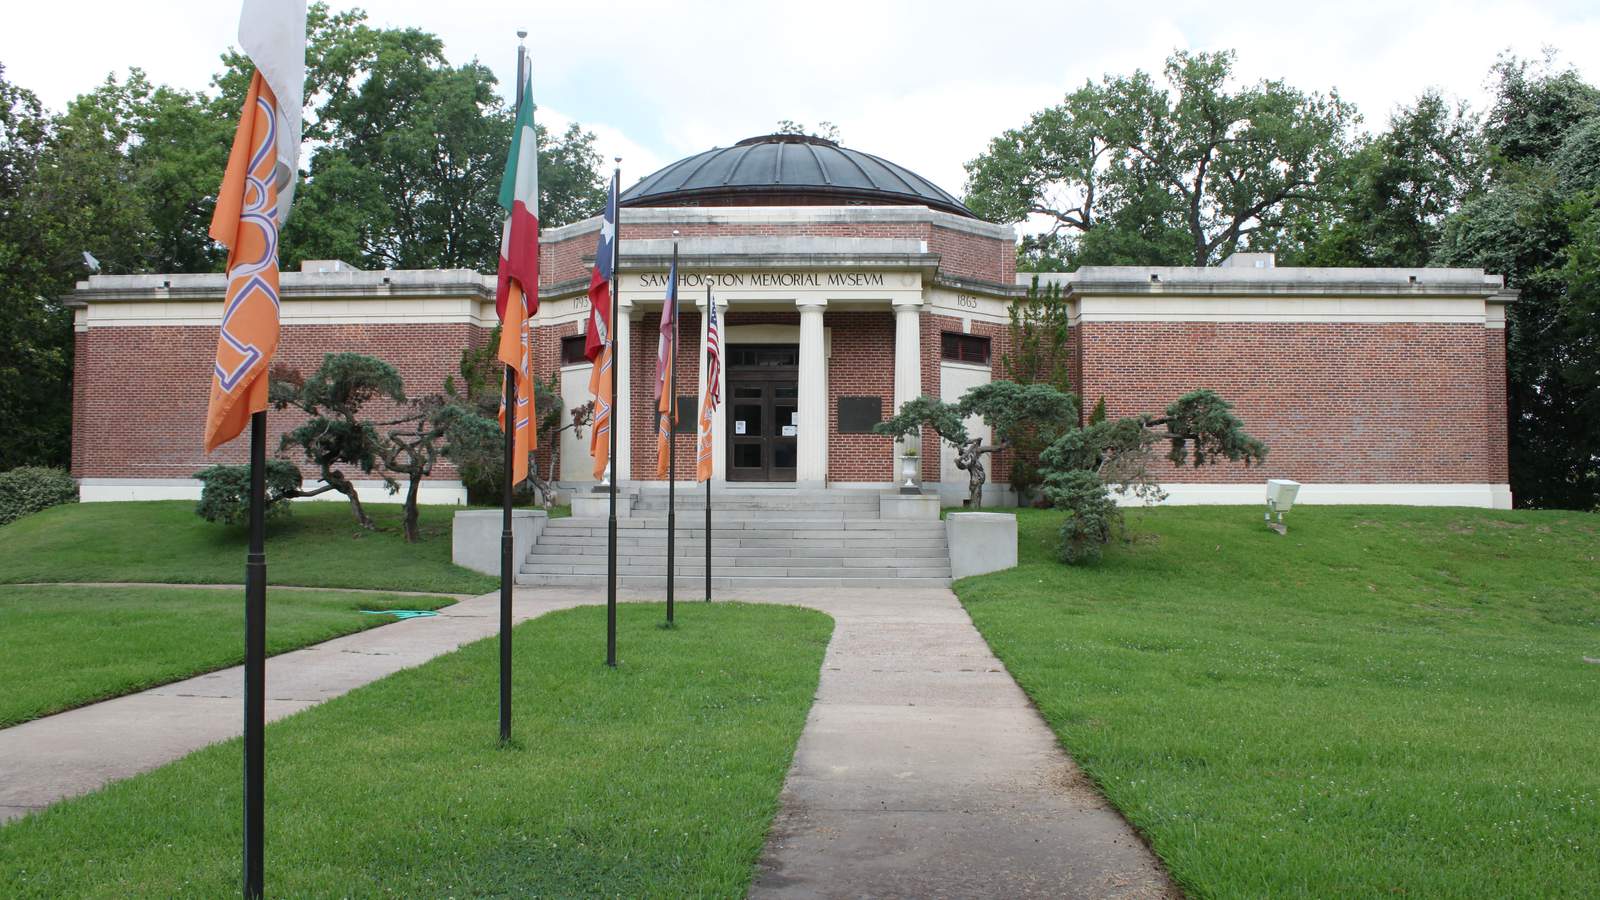 Celebrate Black History Month at the Sam Houston Memorial Museum in Huntsville